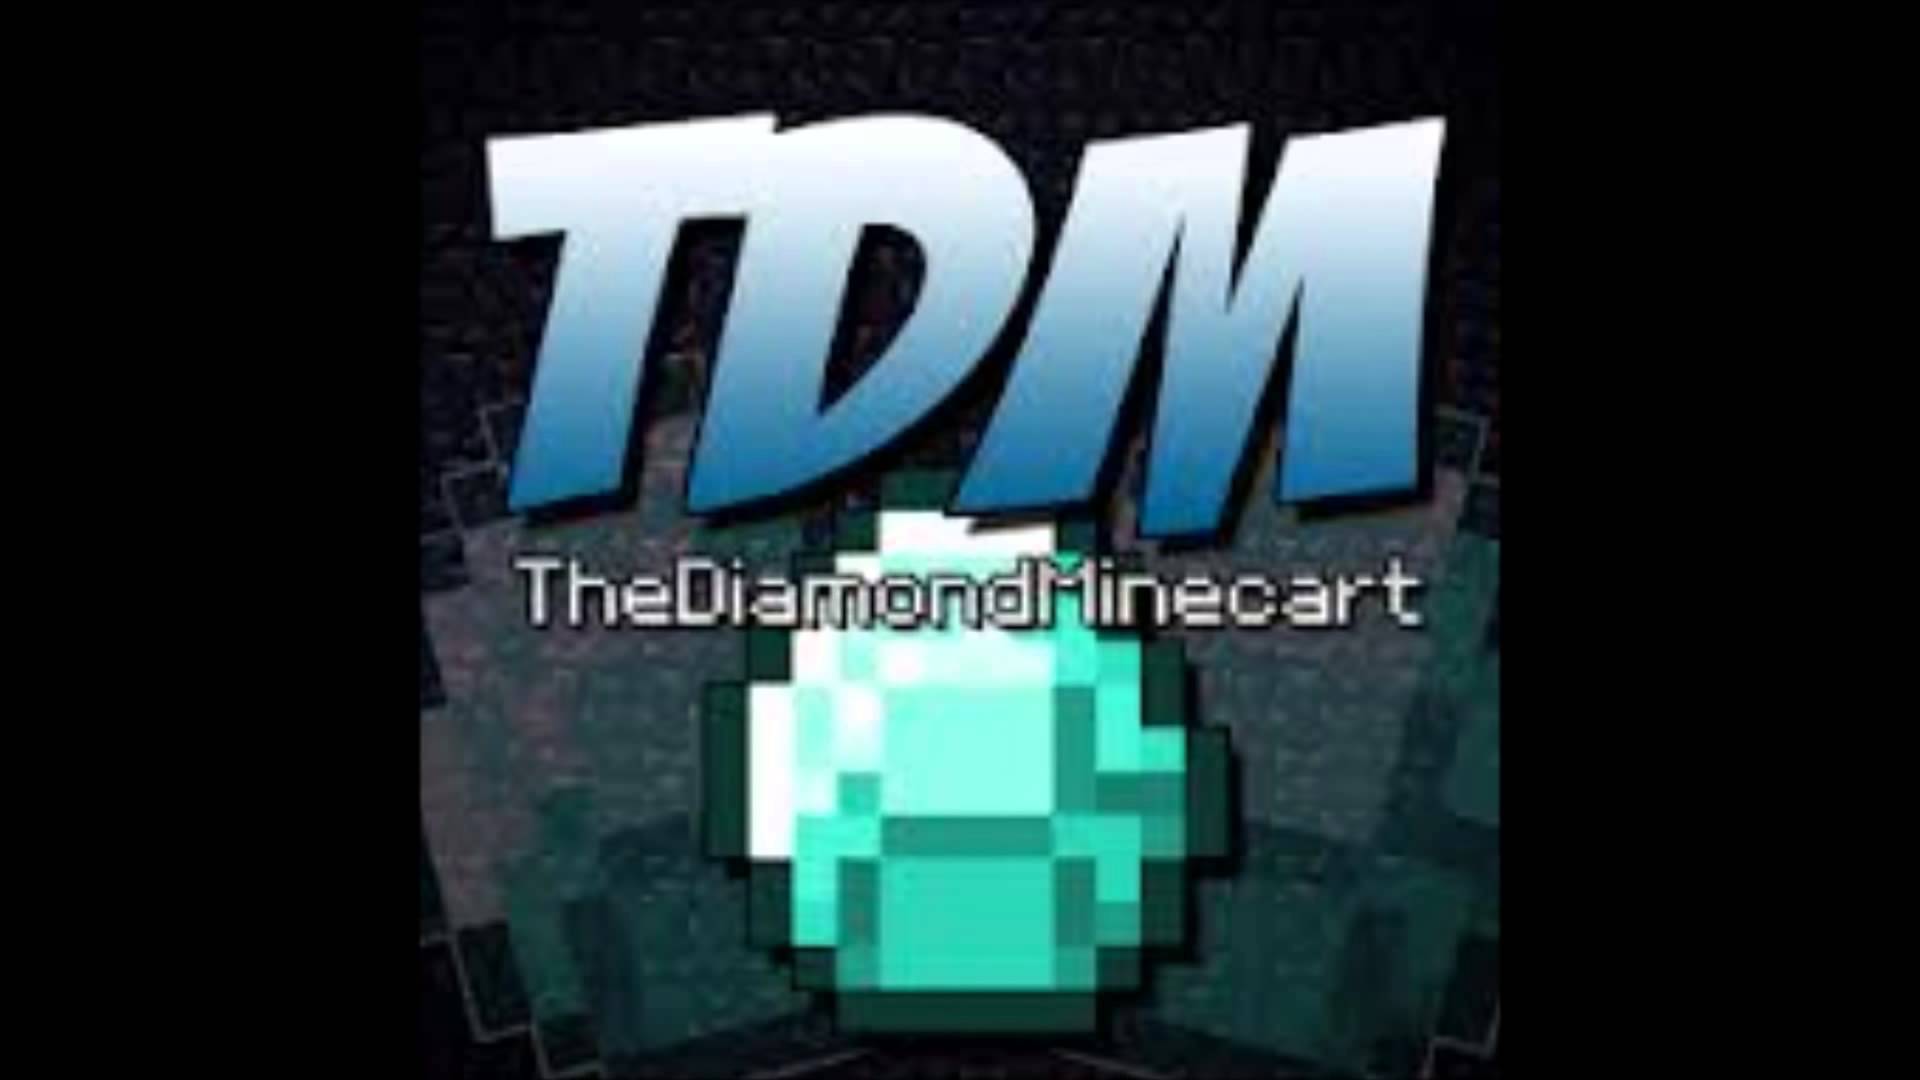 Thediamondminecart Dantdm Intro Song - Darkness , HD Wallpaper & Backgrounds